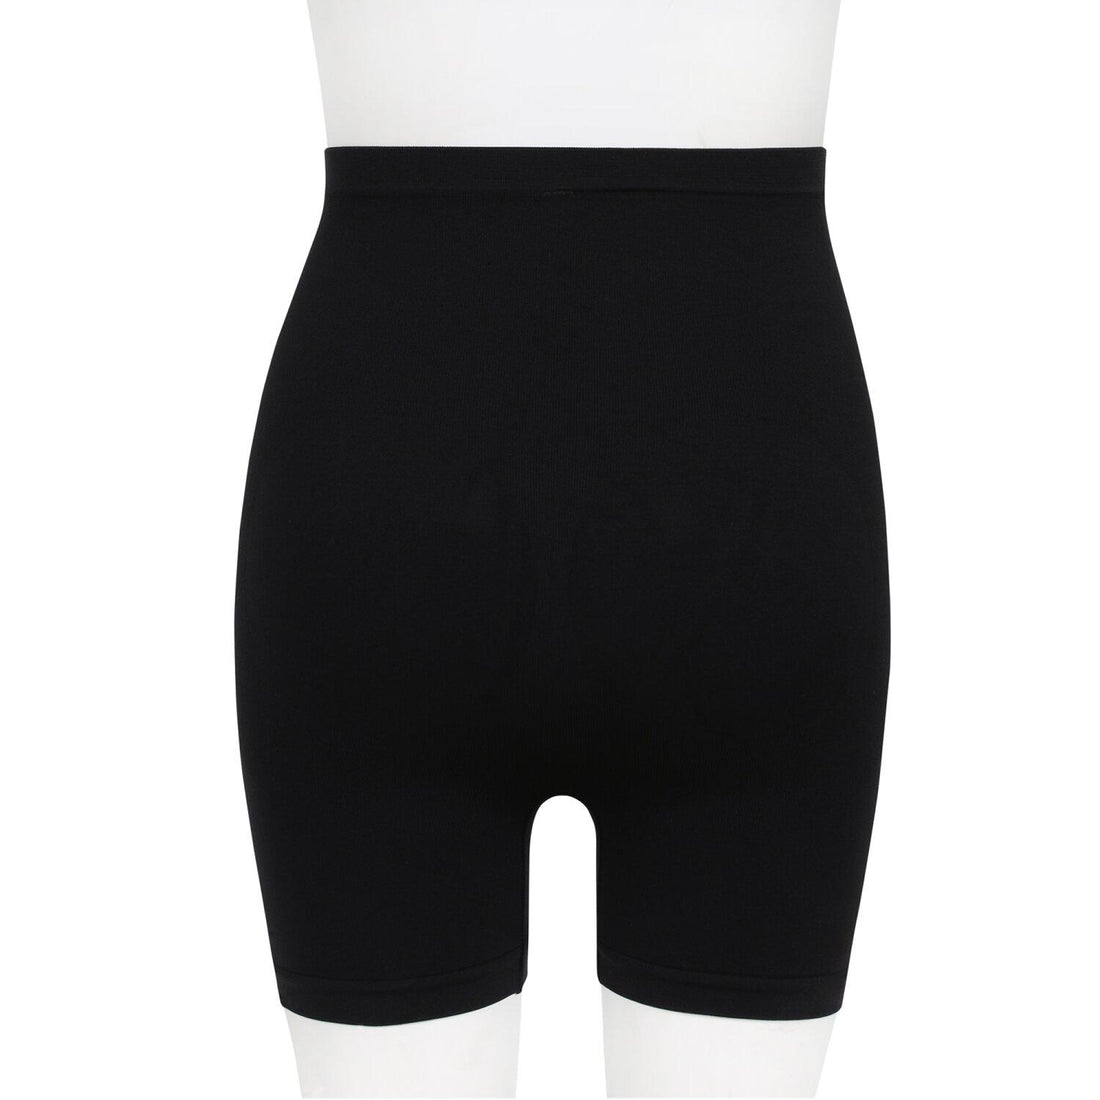 Wacoal Maternity Body Seamless กางเกงในสำหรับคนท้อง รูปแบบขายาว รุ่น WM6546 สีดำ (BL)